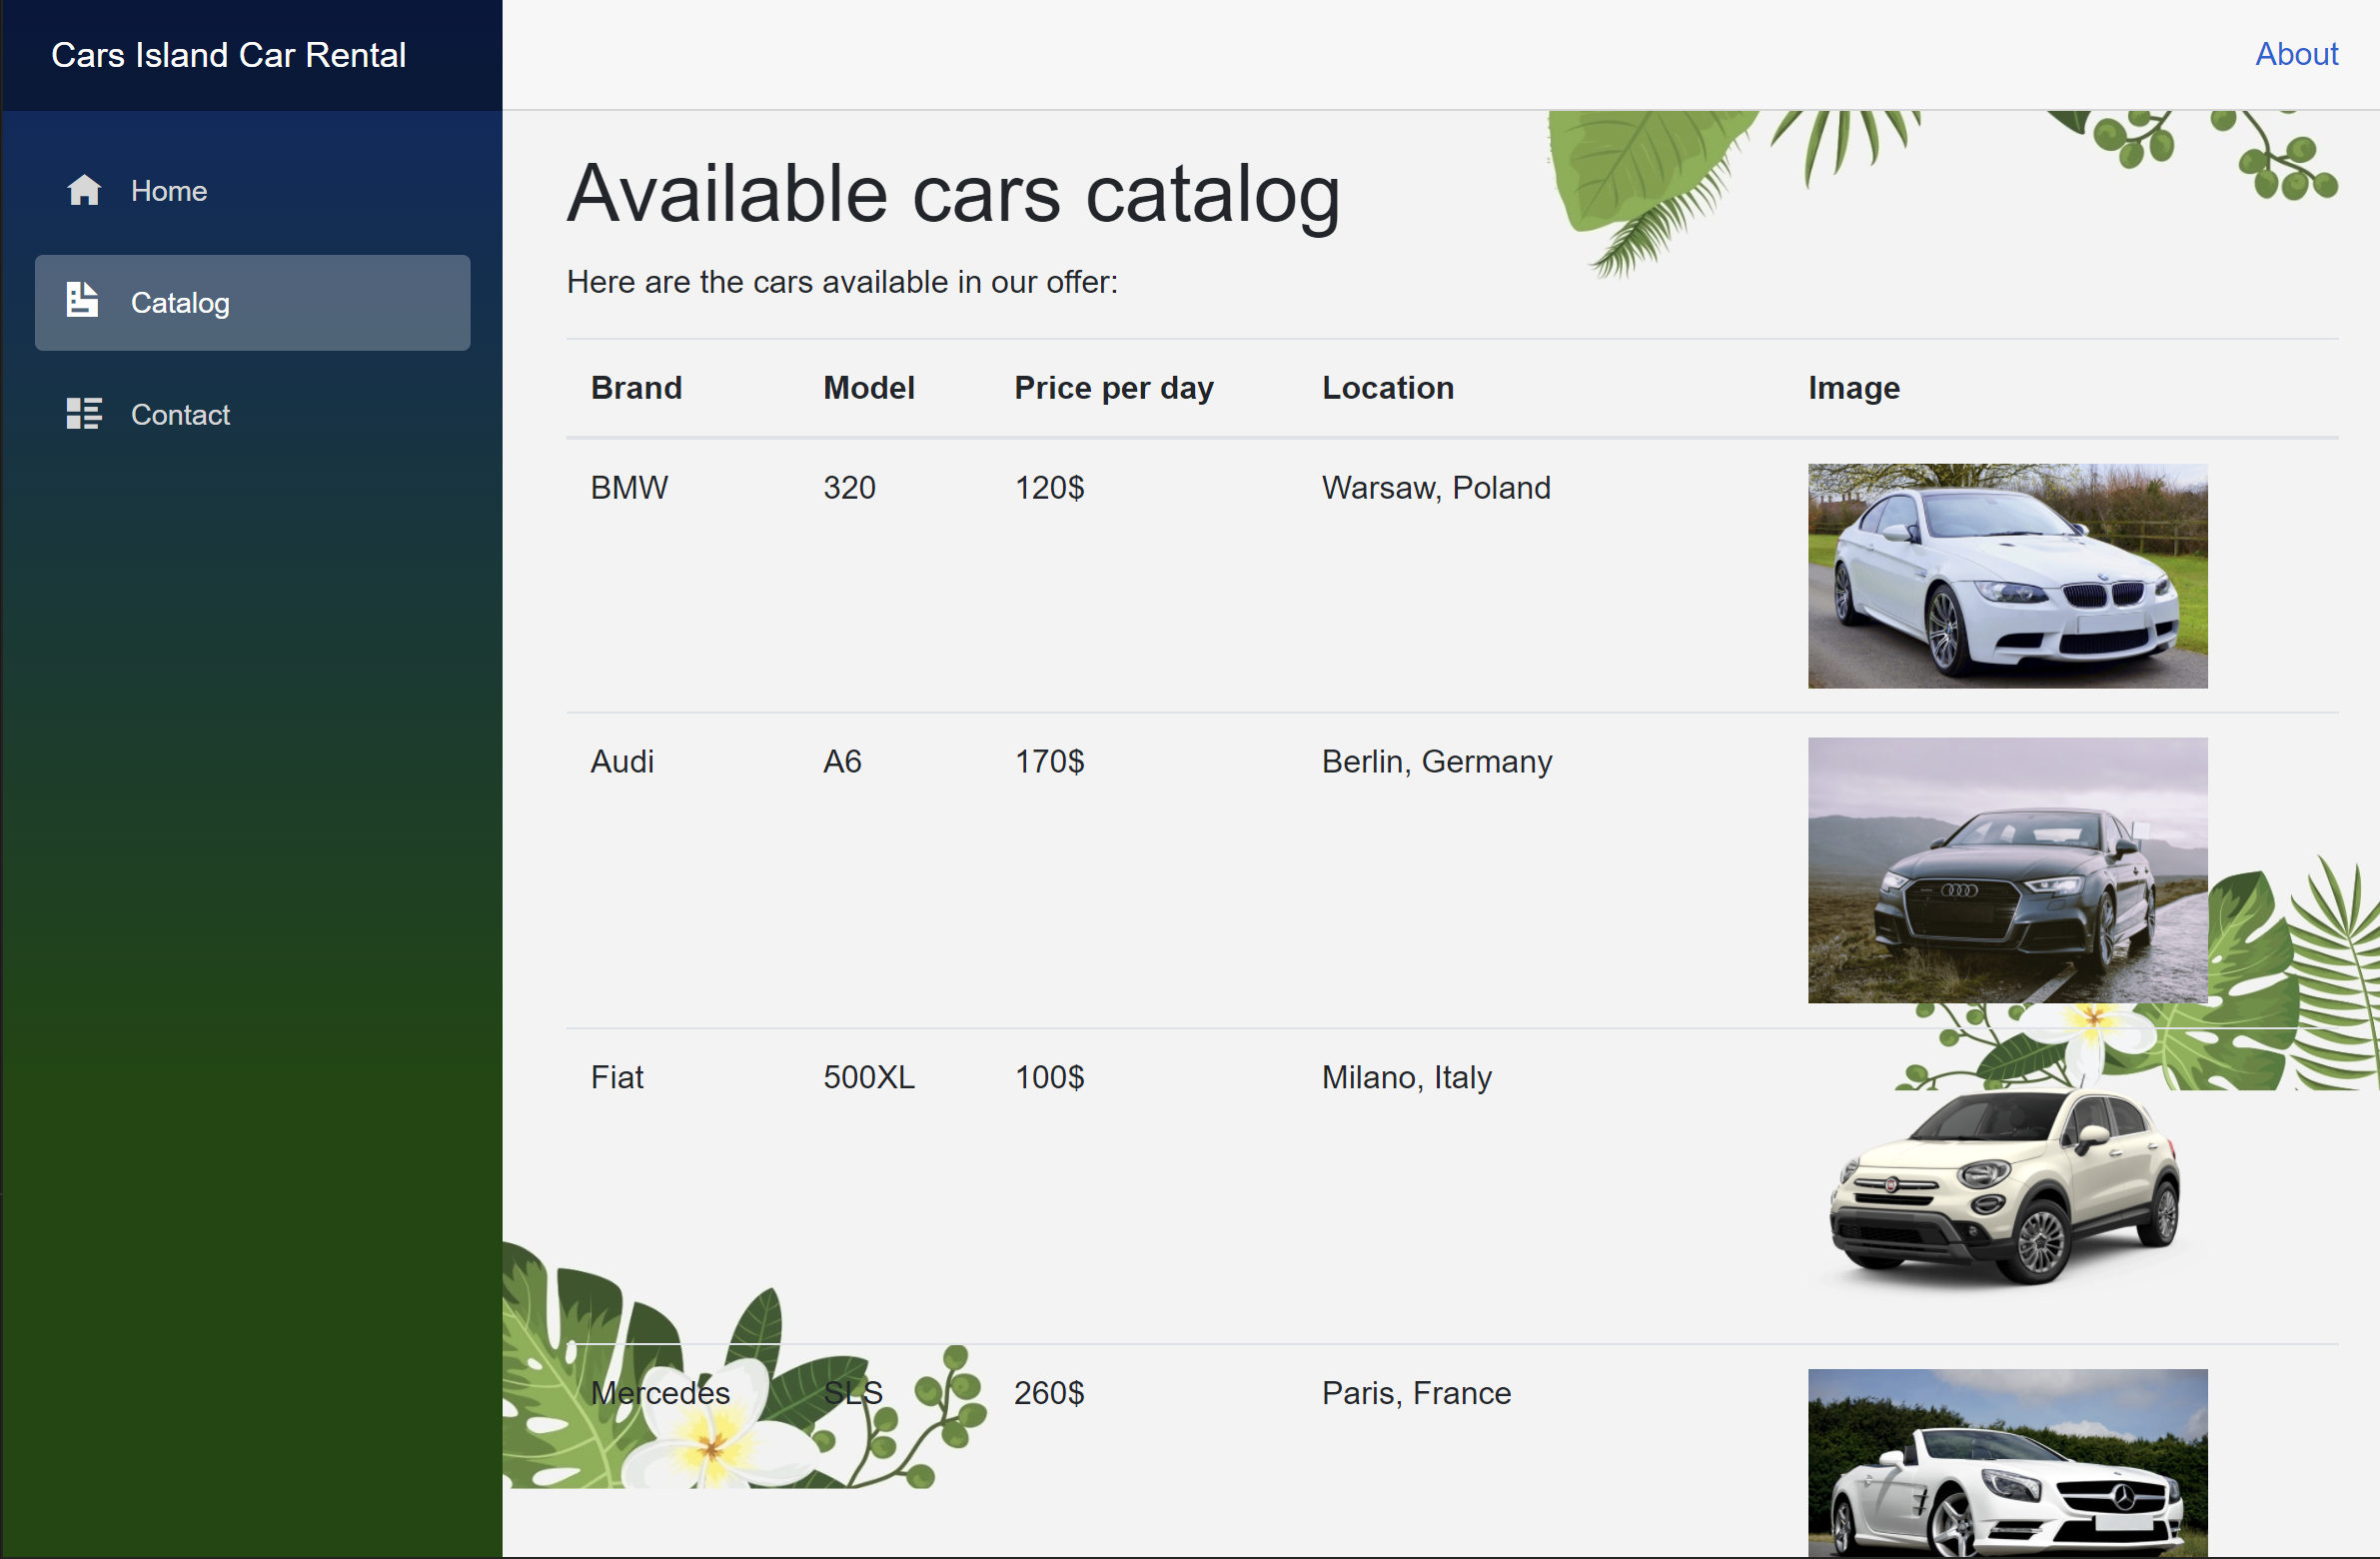 Cars Island Car Rental on the Microsoft Azure cloud - part 1